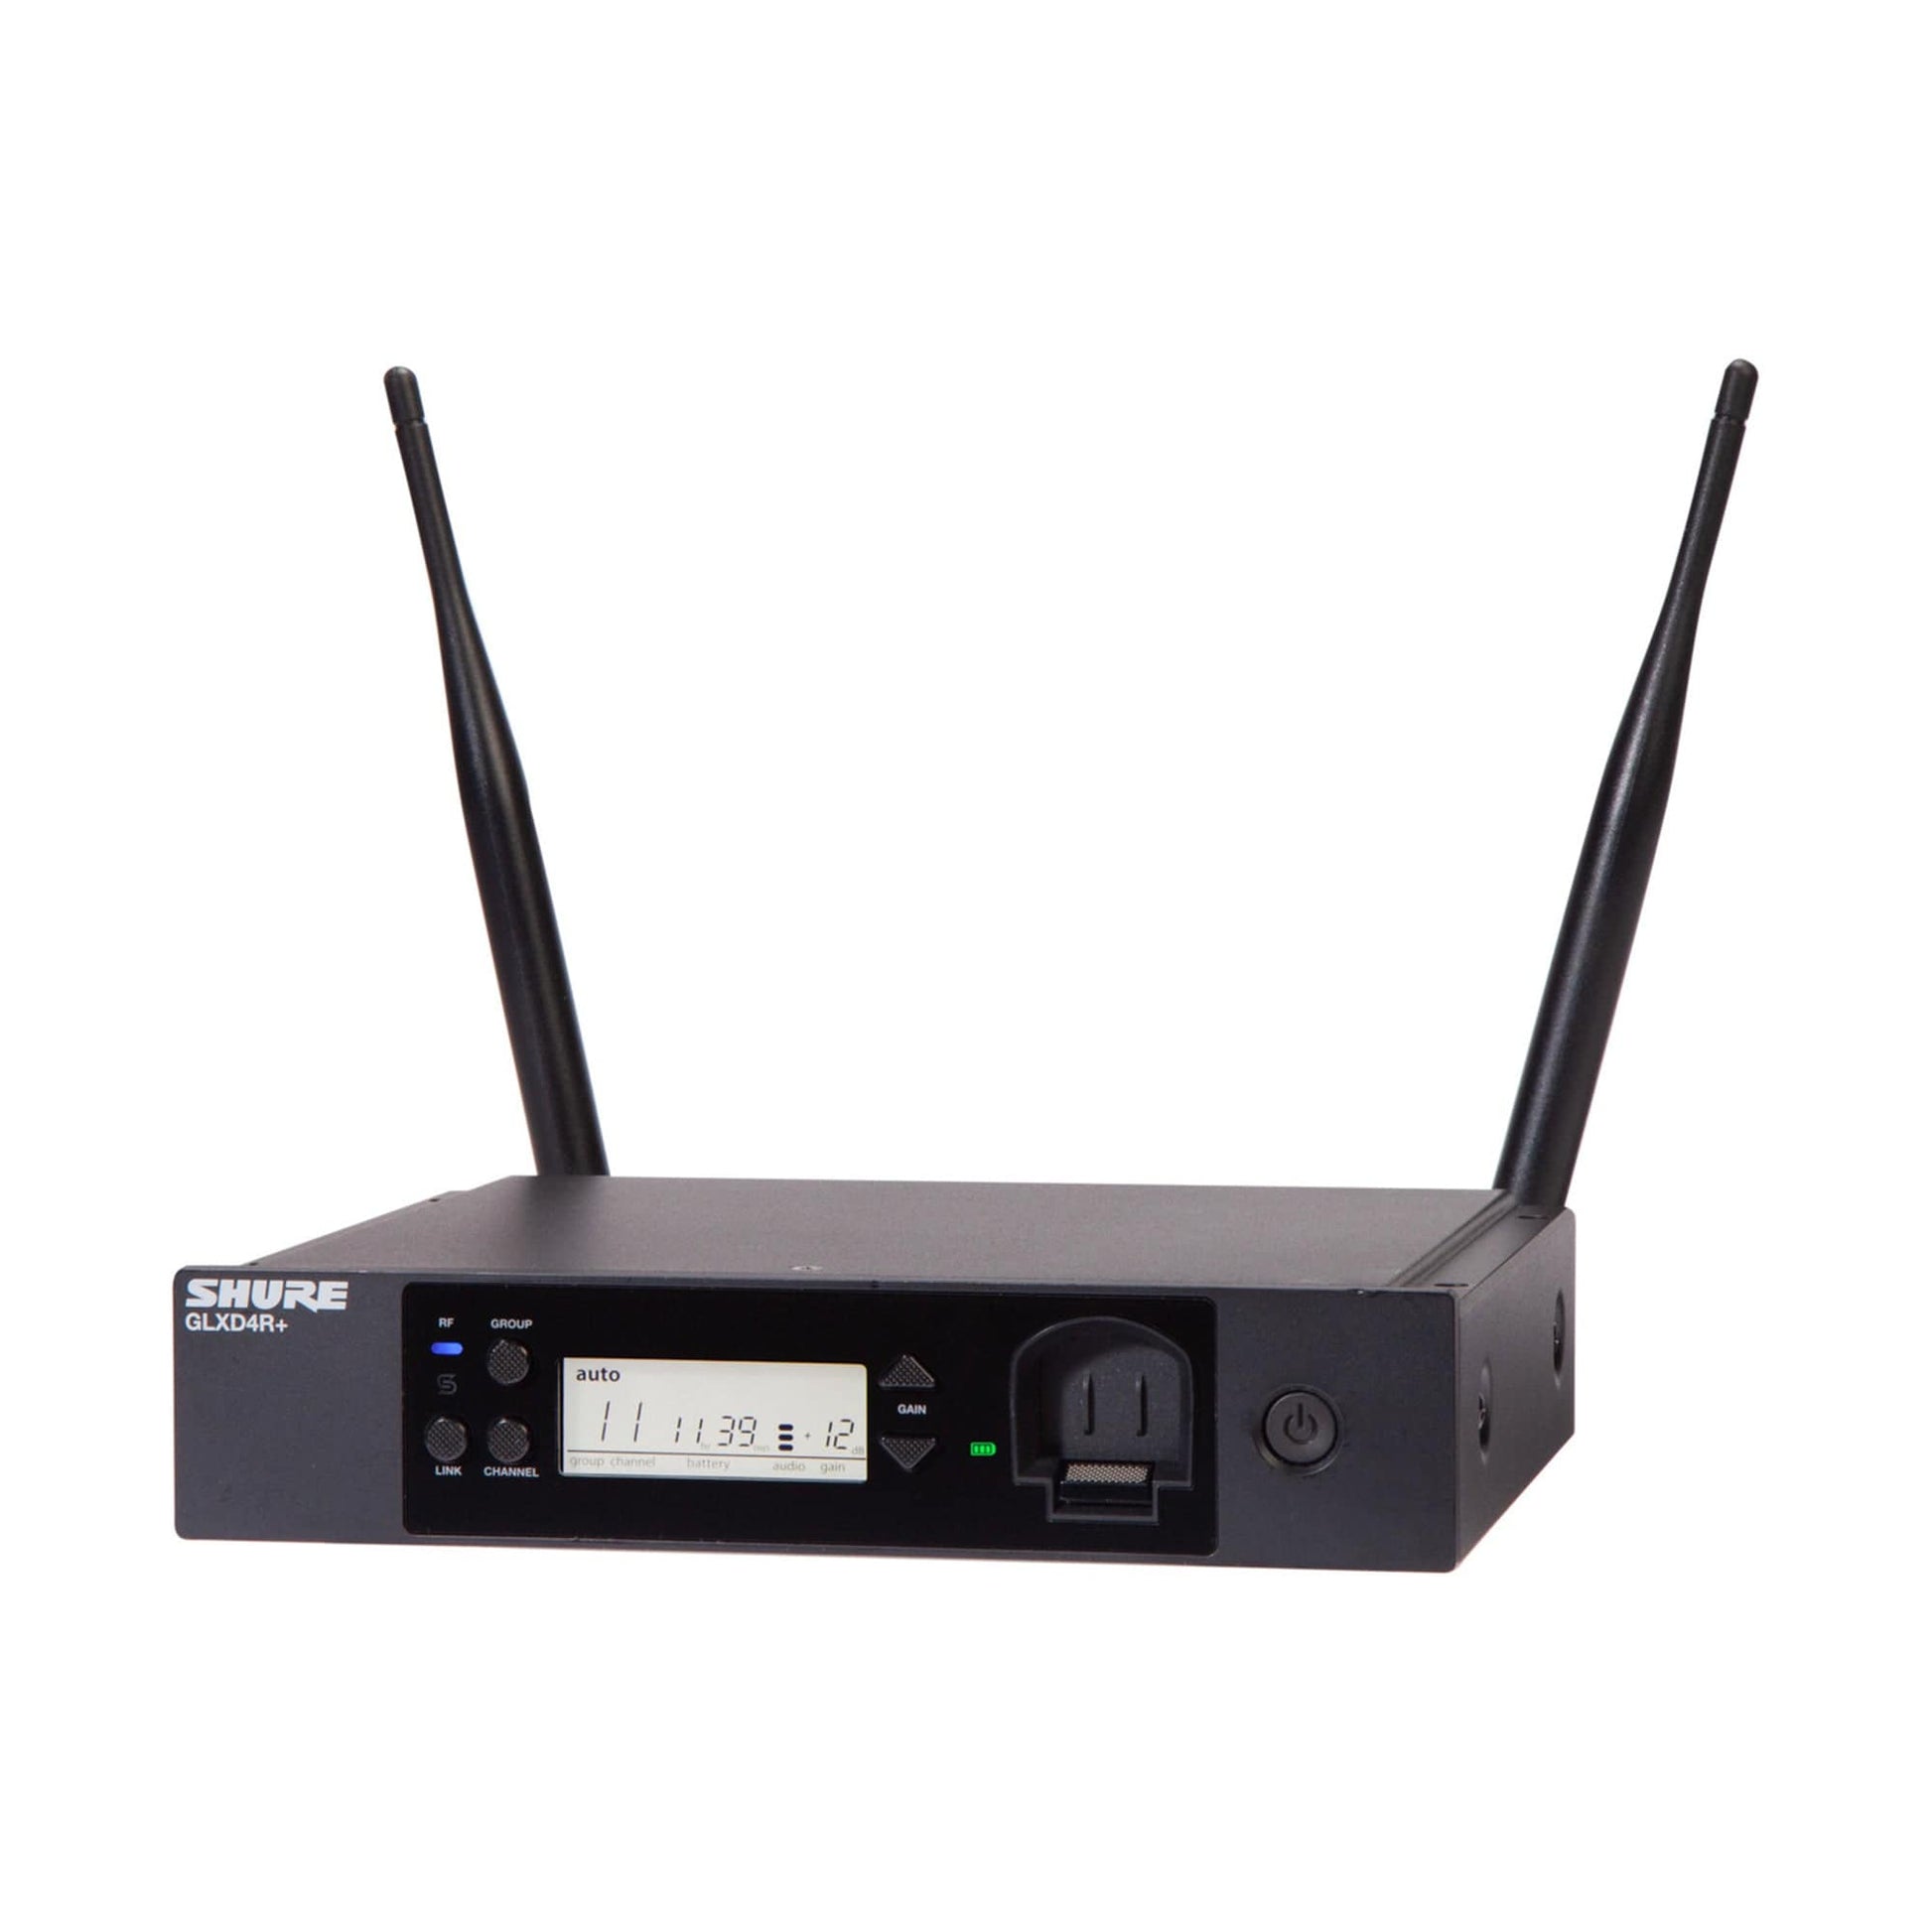 Shure GLXD24R+ Wireless Vocal System w/BETA 58A Pro Audio / Accessories / Wireless Receivers